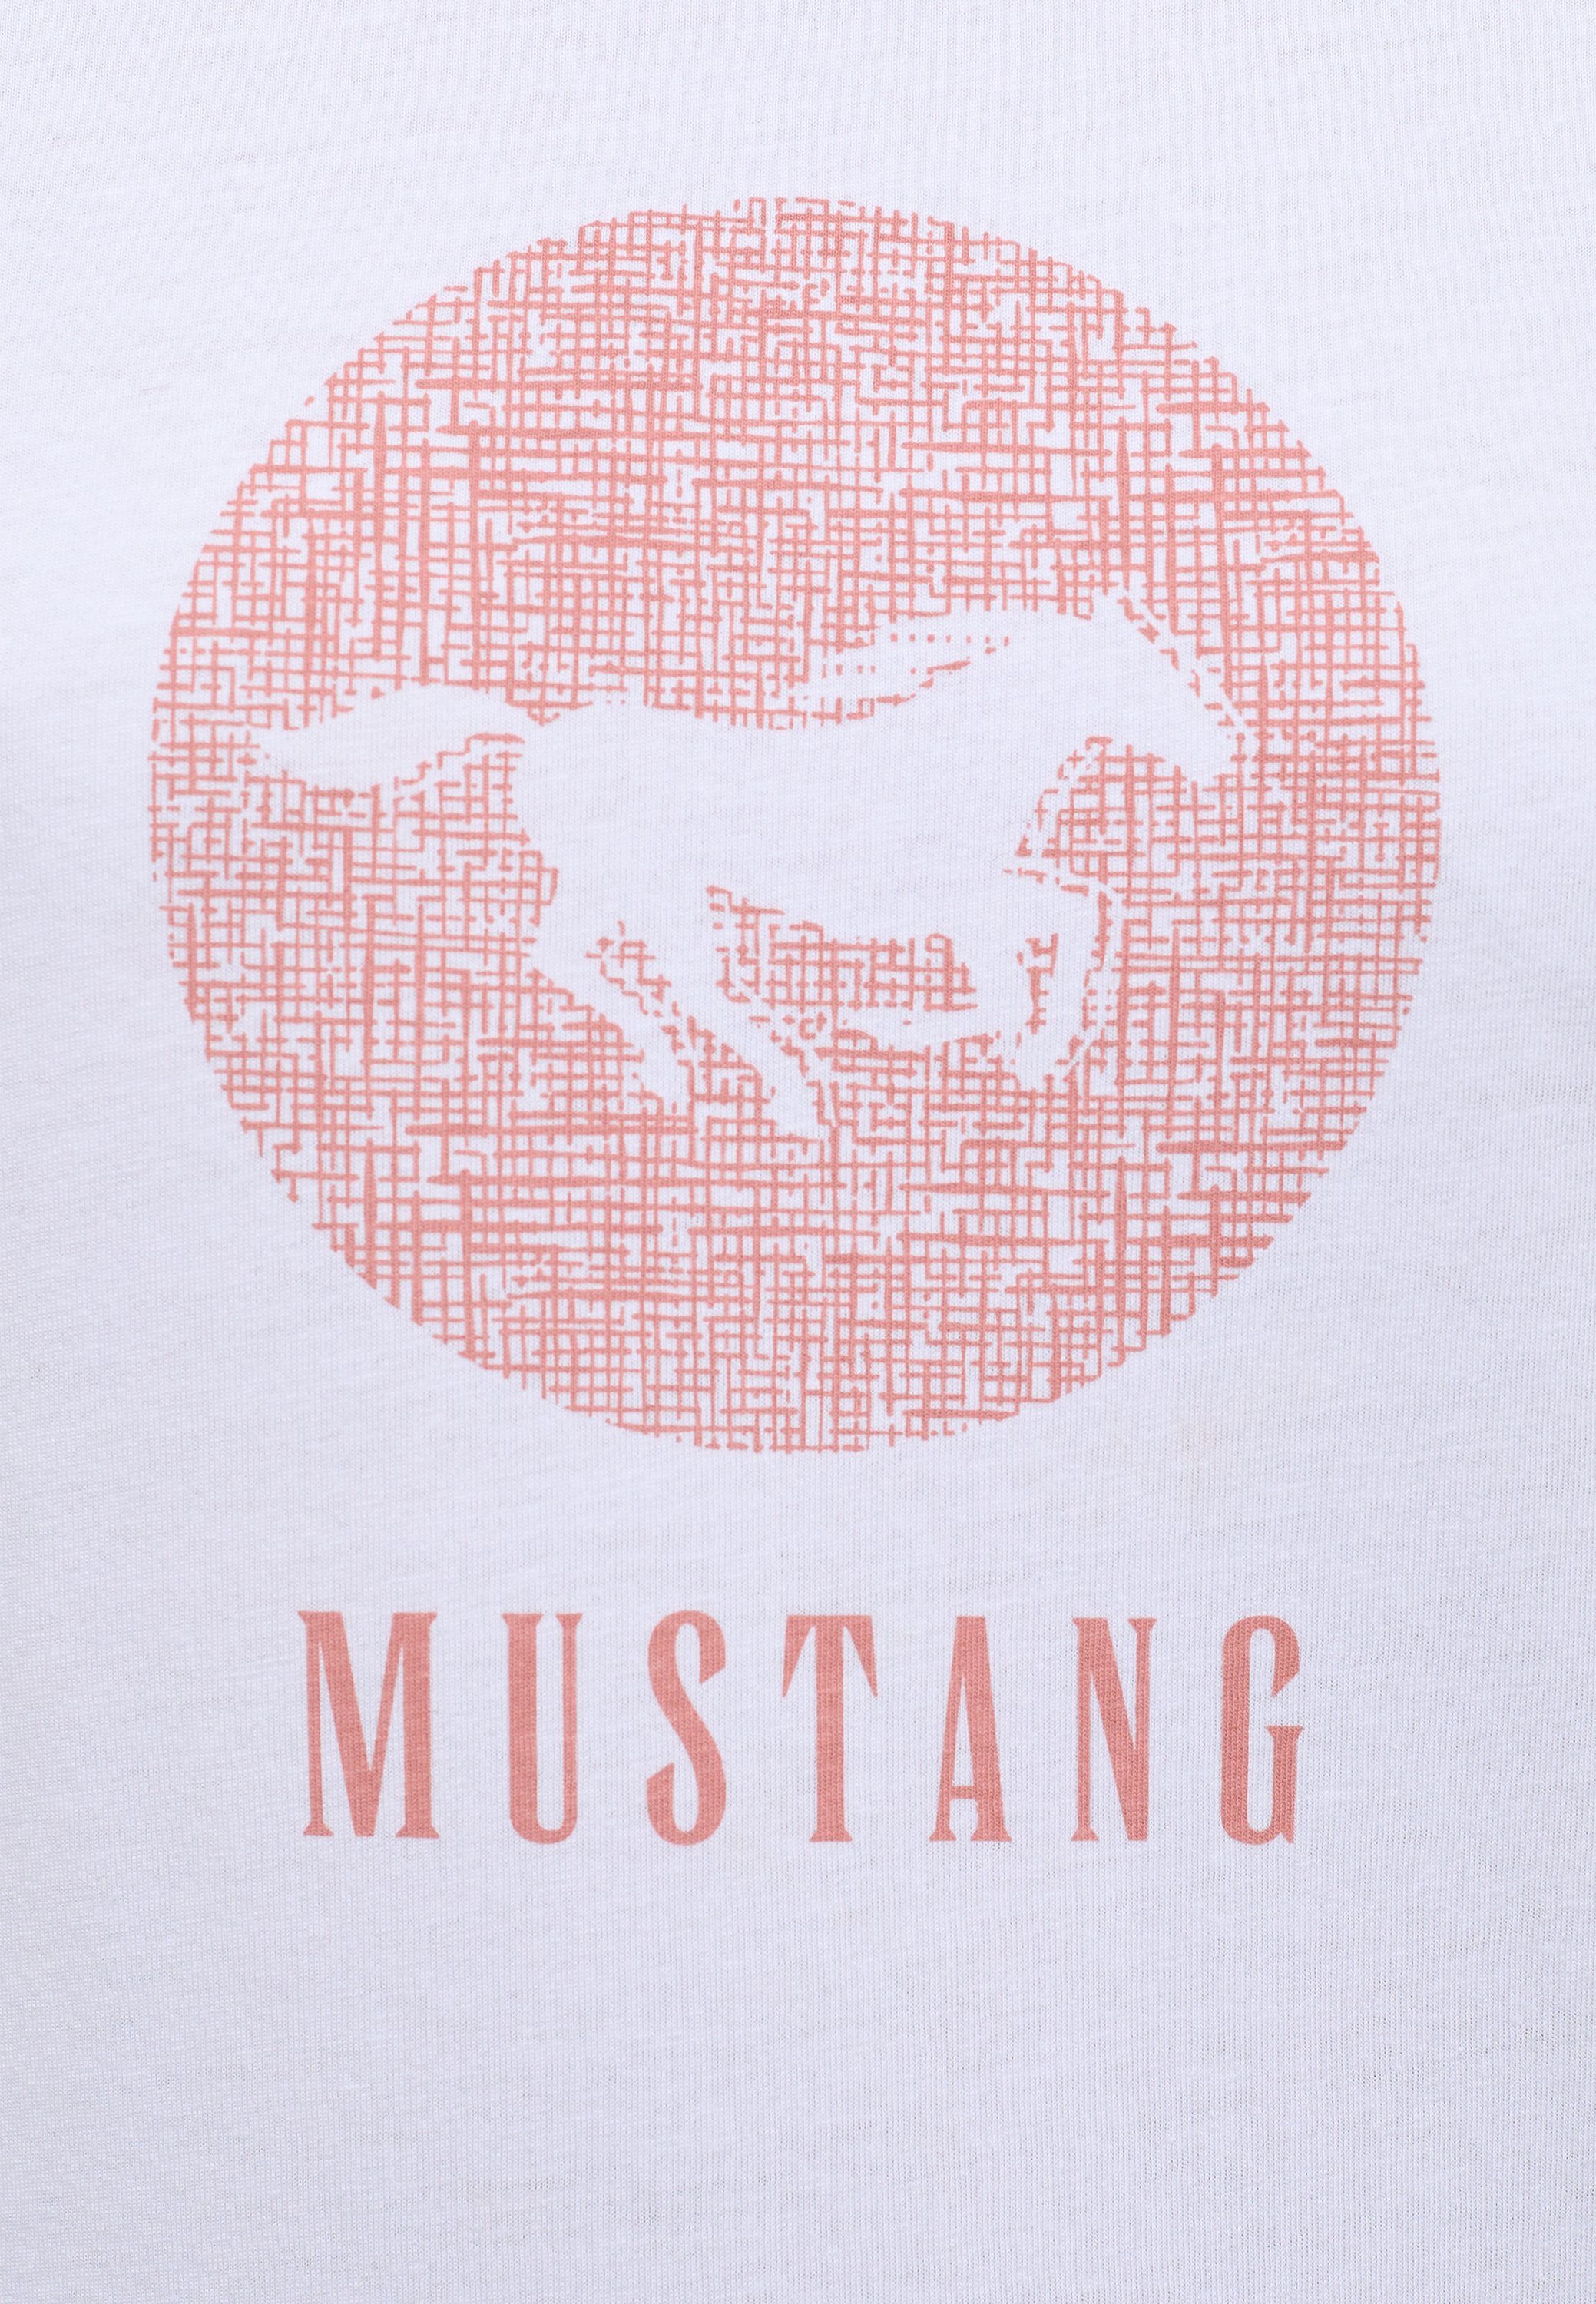 MUSTANG Kurzarmshirt Mustang T-Shirt Print-Shirt weiß | T-Shirts